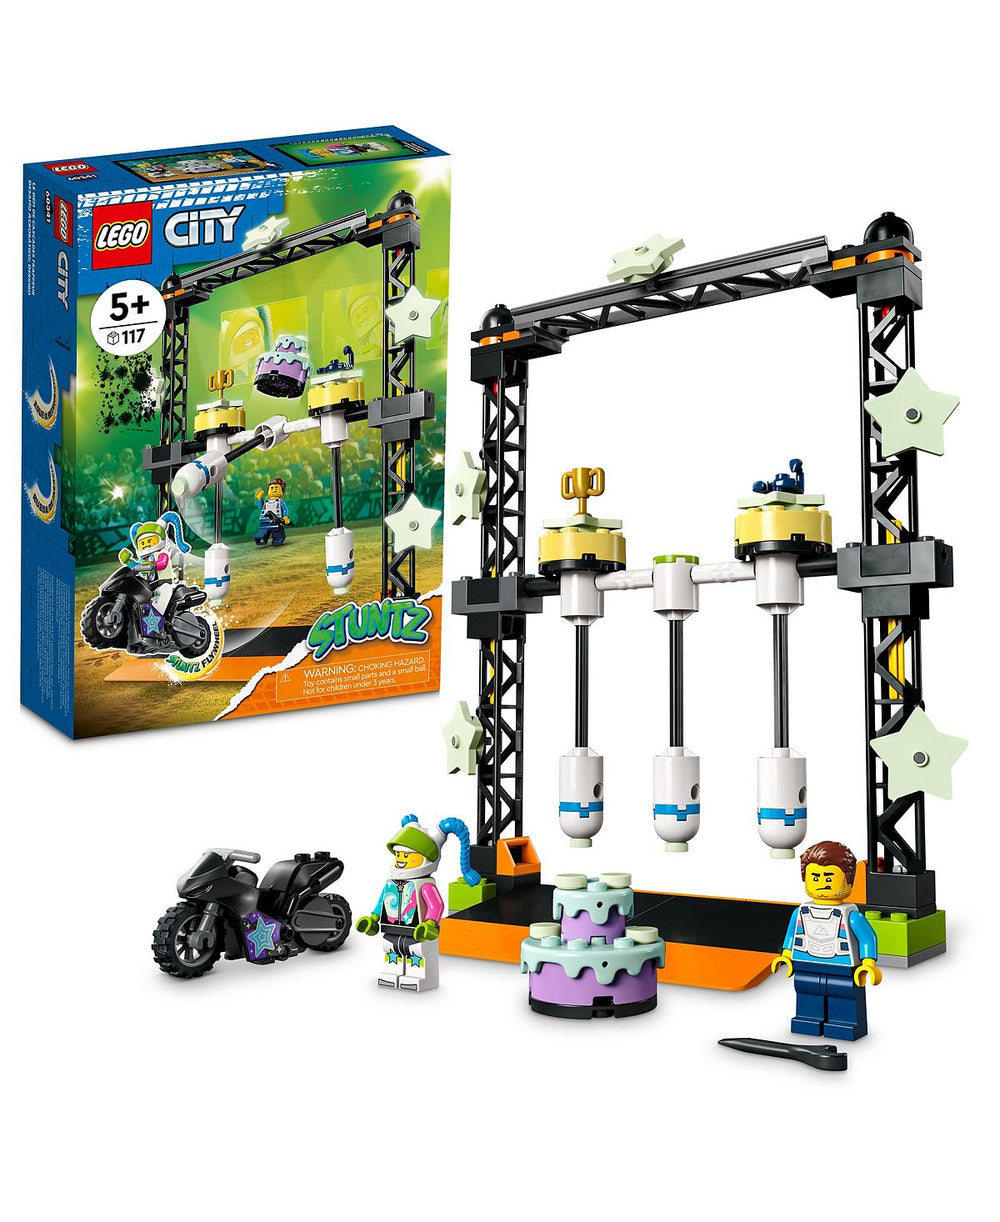 LEGO City Stuntz The Knockdown Stunt Challenge Building Kit (117 Pieces)